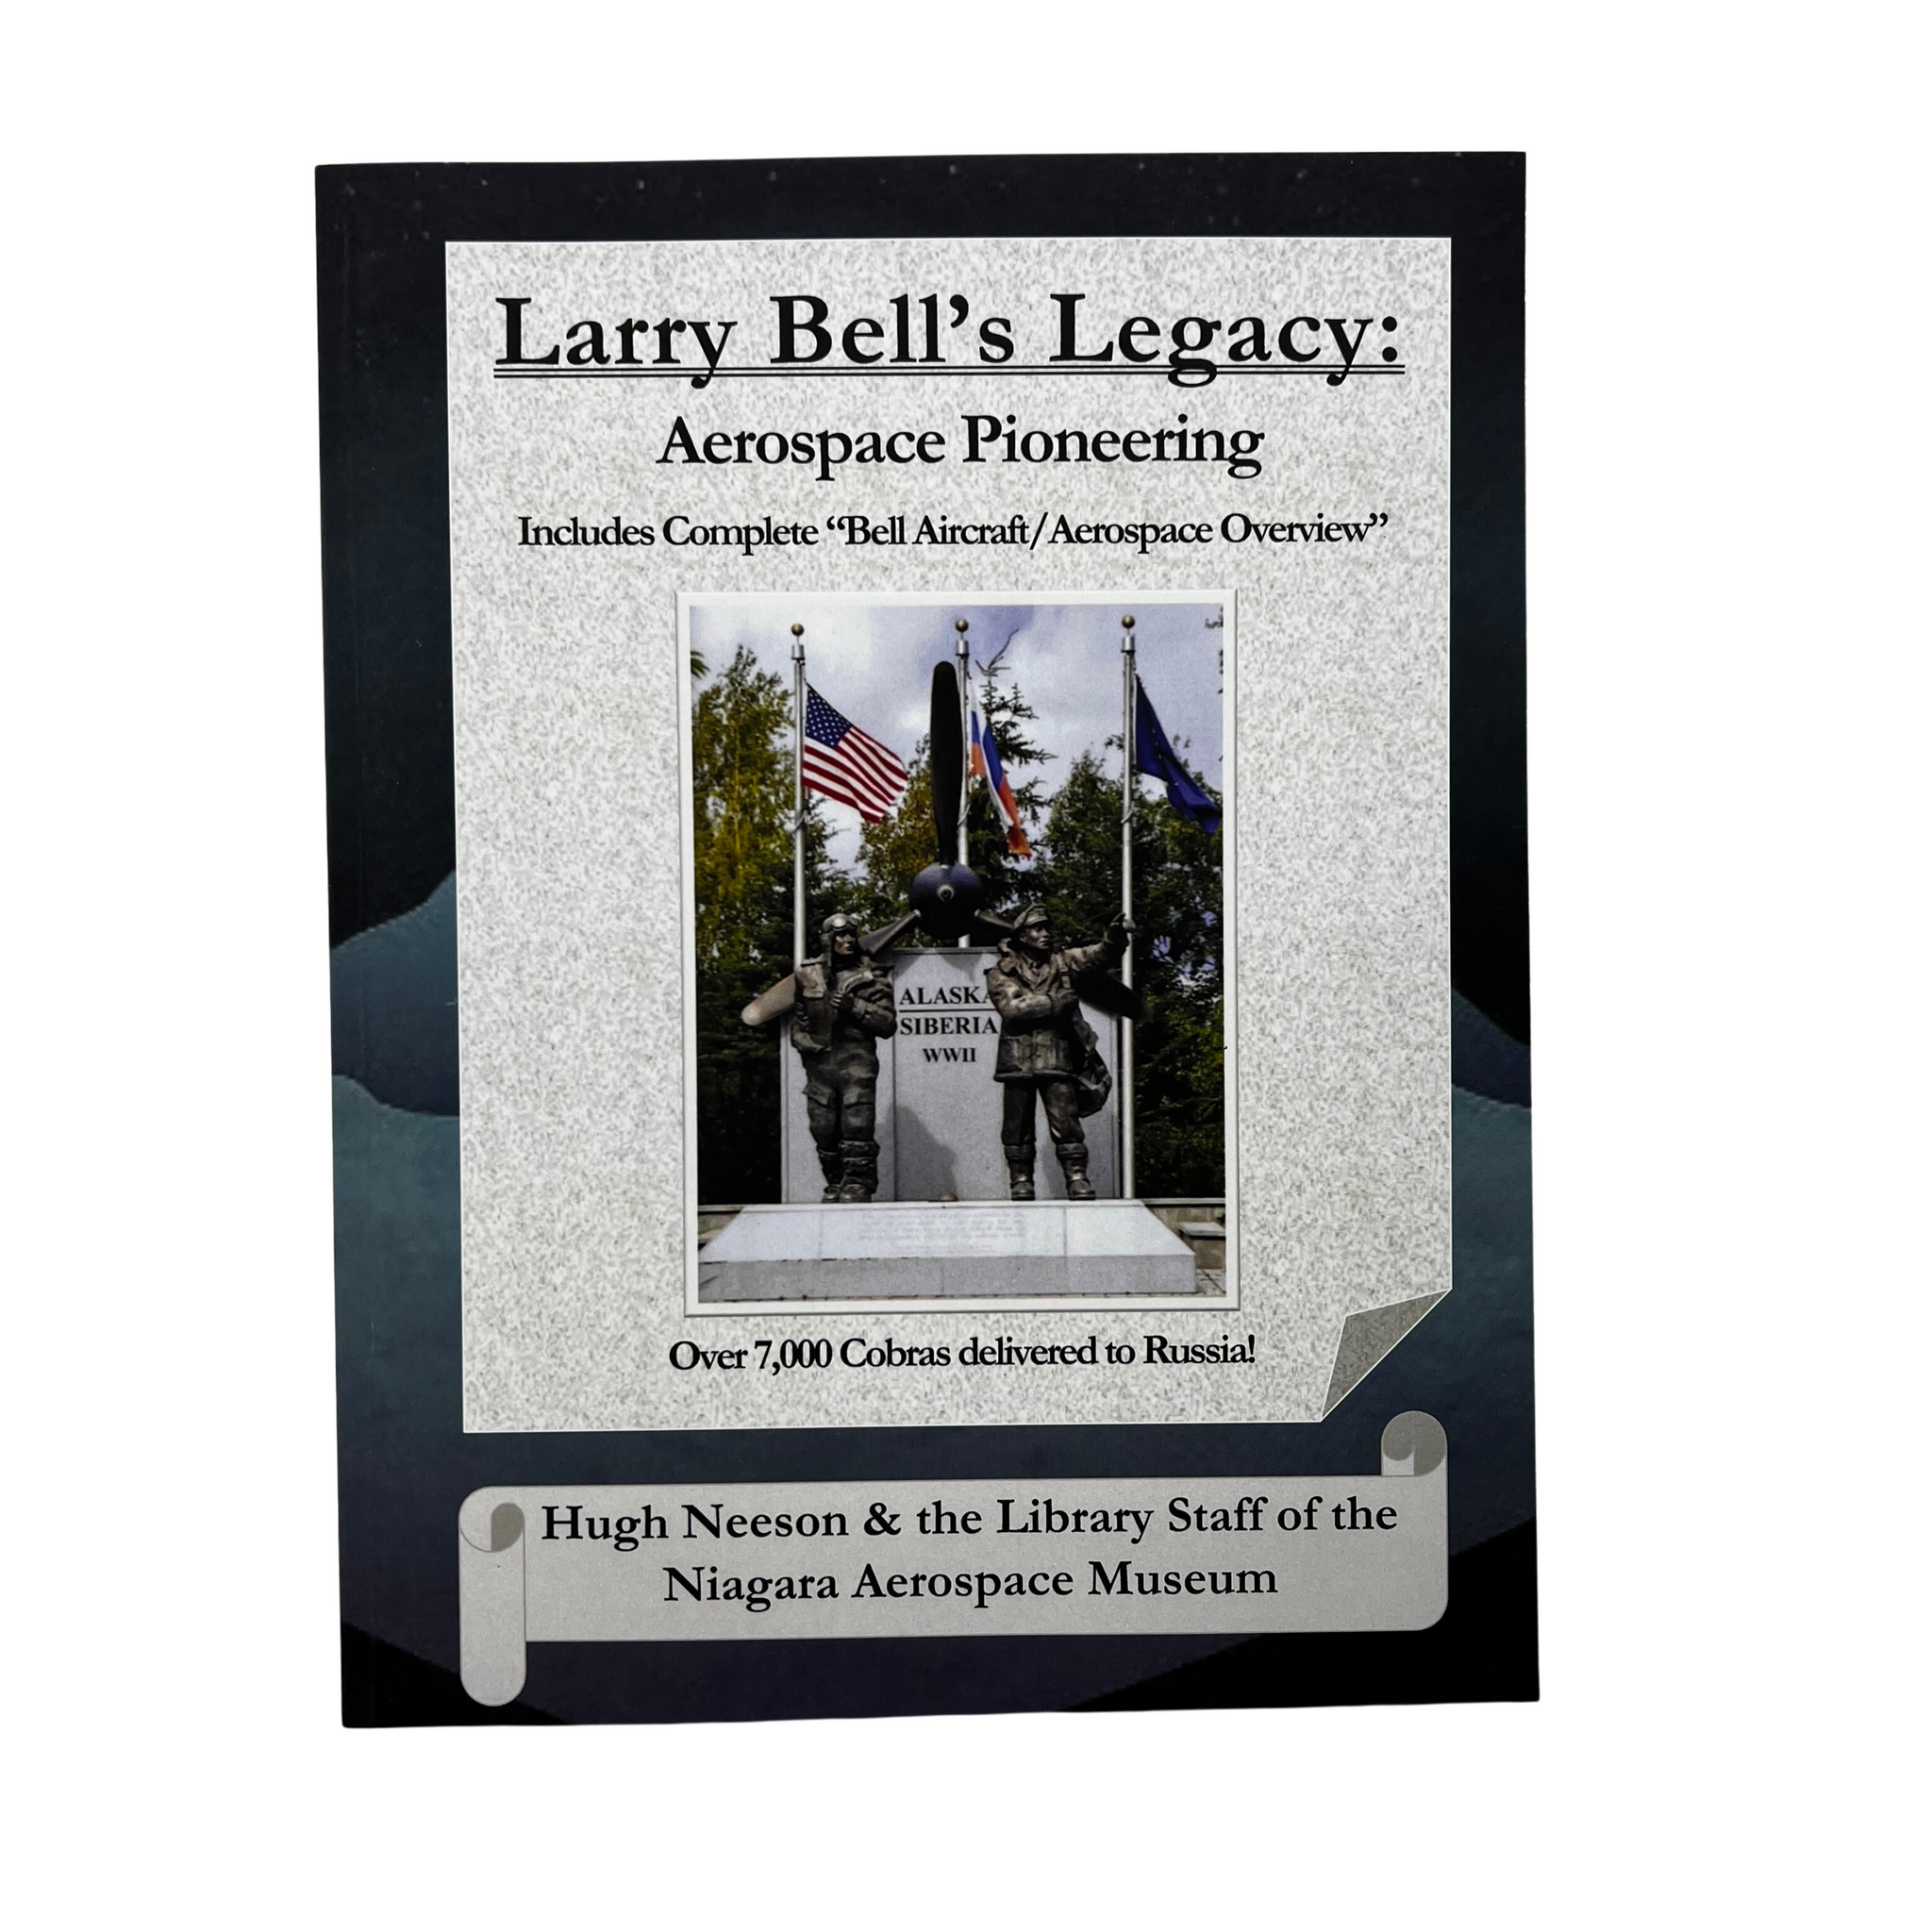 Larry Bell's Legacy: Aerospace Pioneering